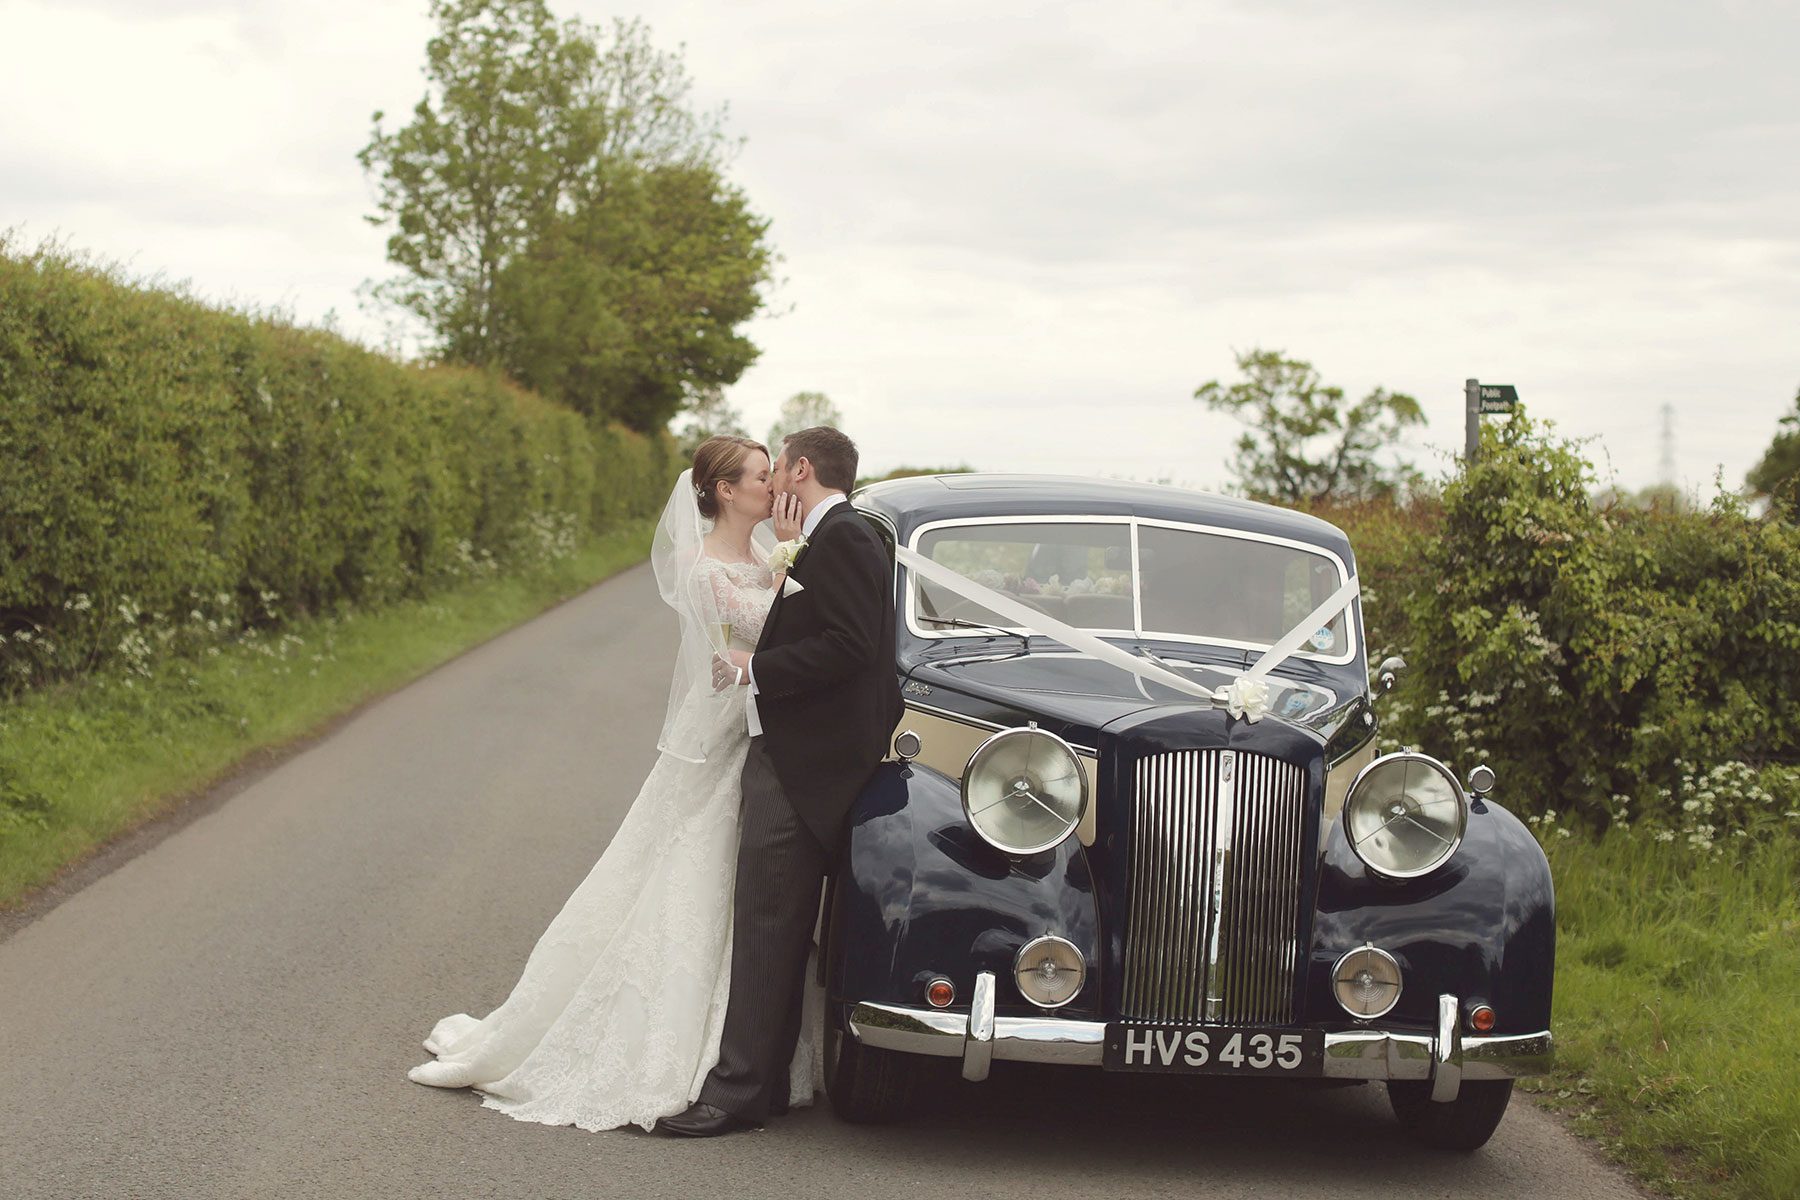 Their wedding car - Wedding Photographer at Dumbleton Hall | Bullit - Cheltenham & Cotswolds